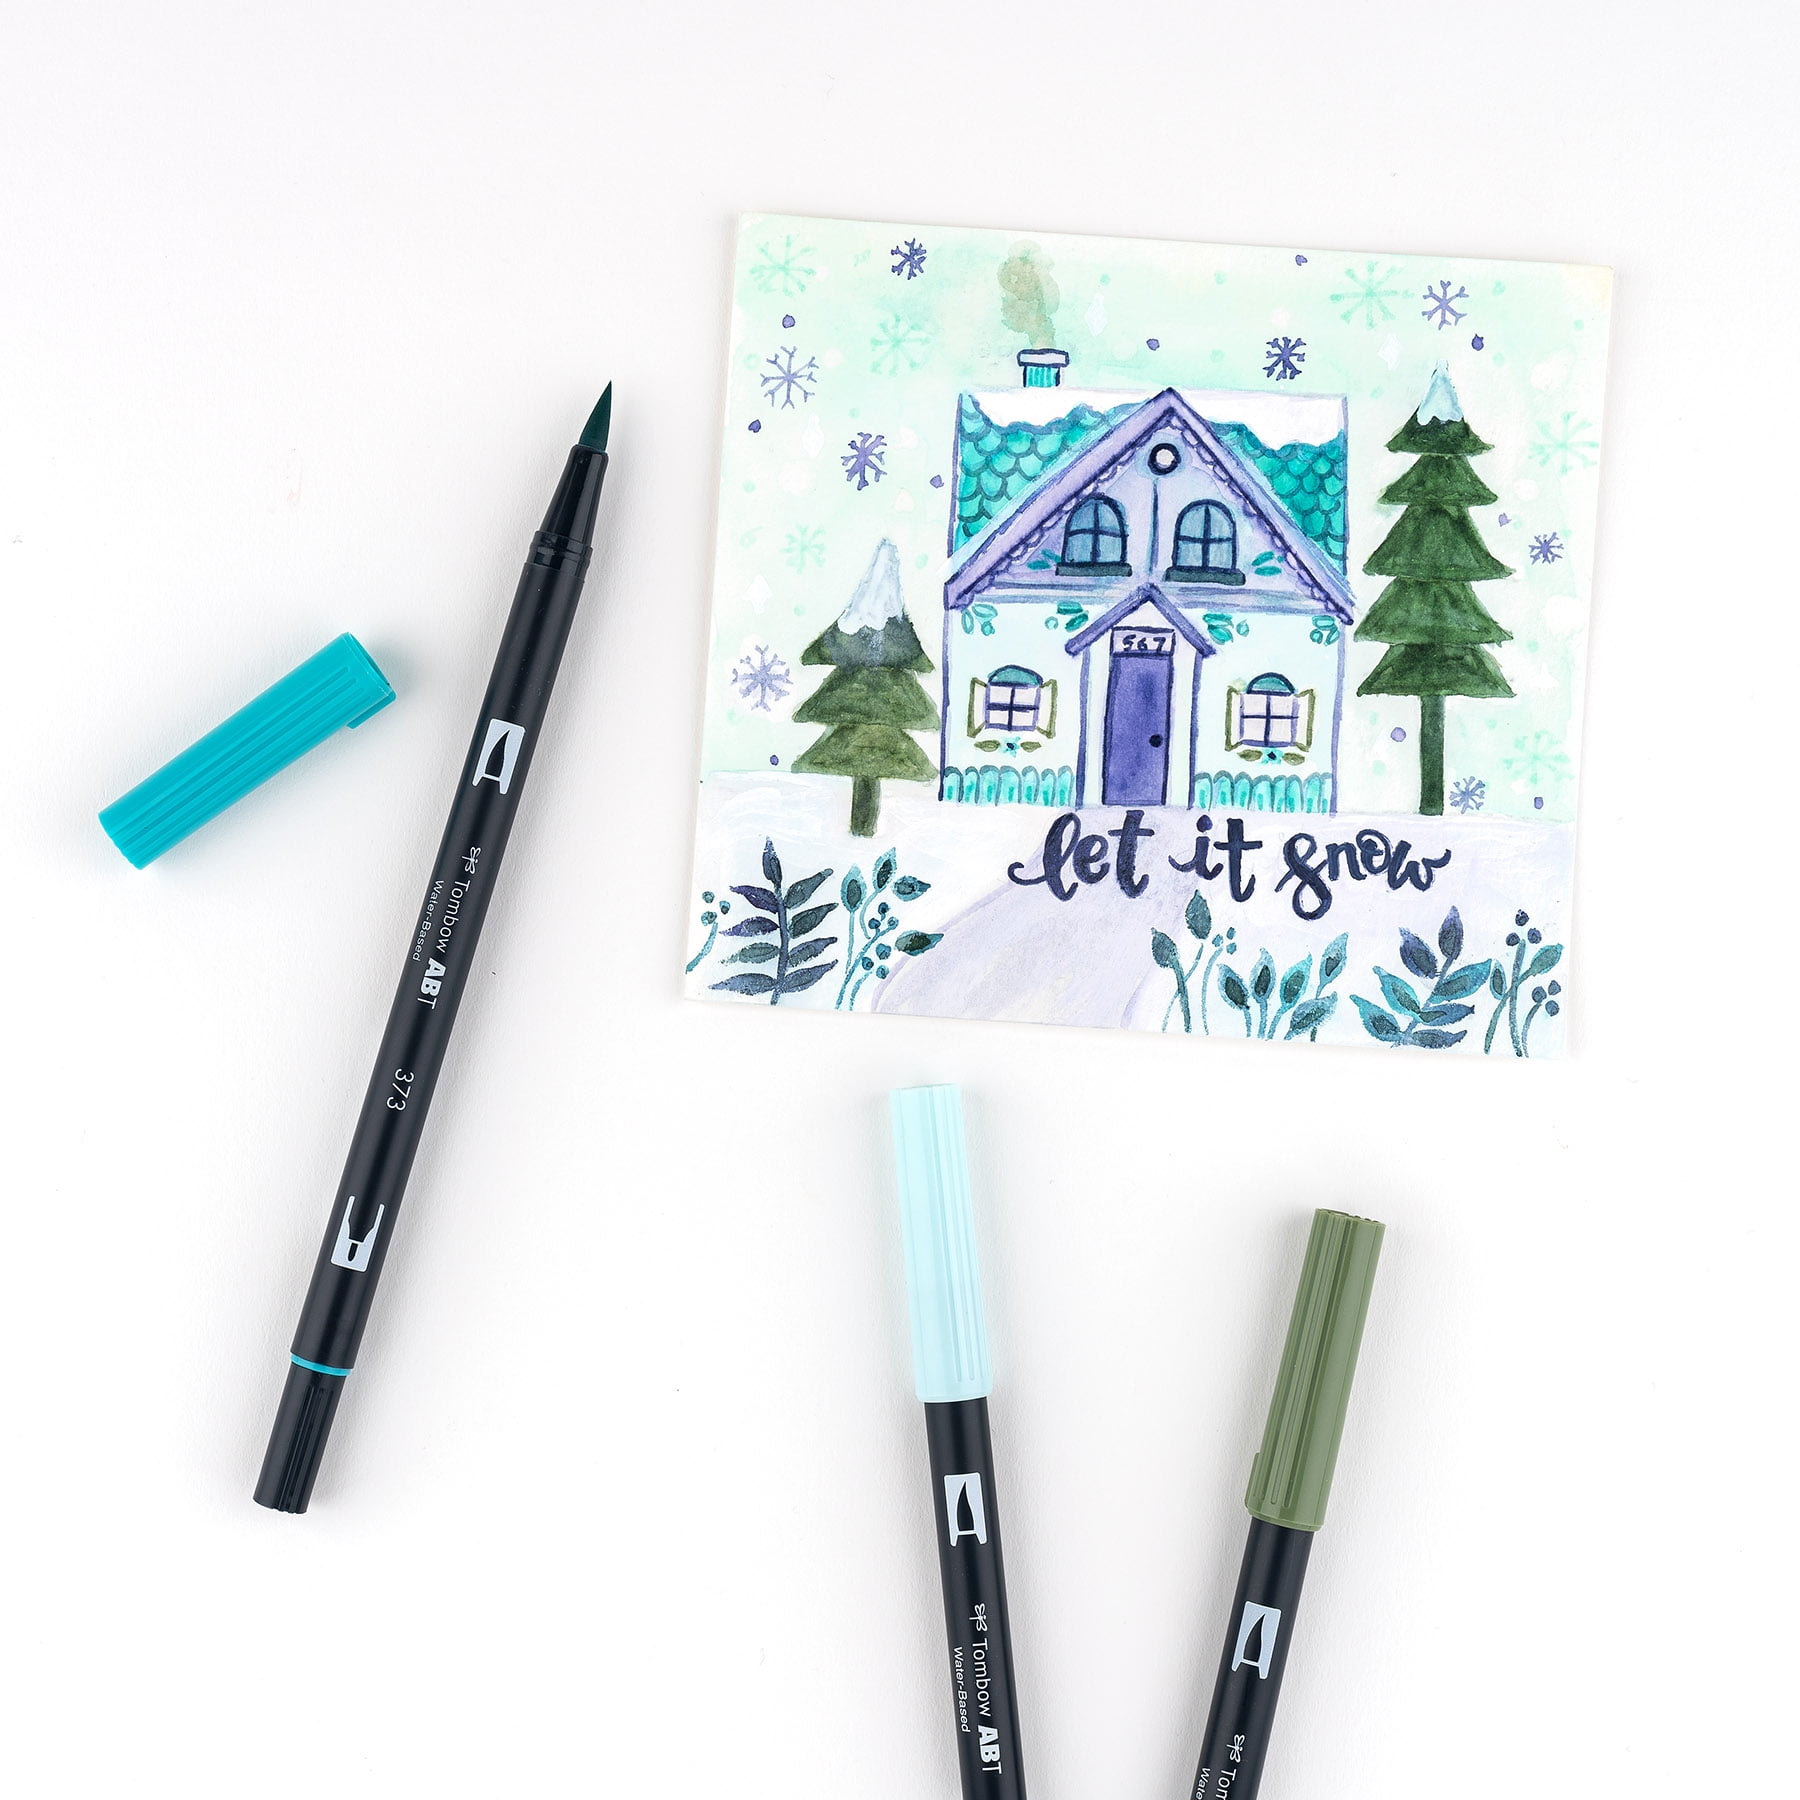 Tombow Dual Brush Pen Art Markers (Multiple Sets) - Columbia Omni Studio